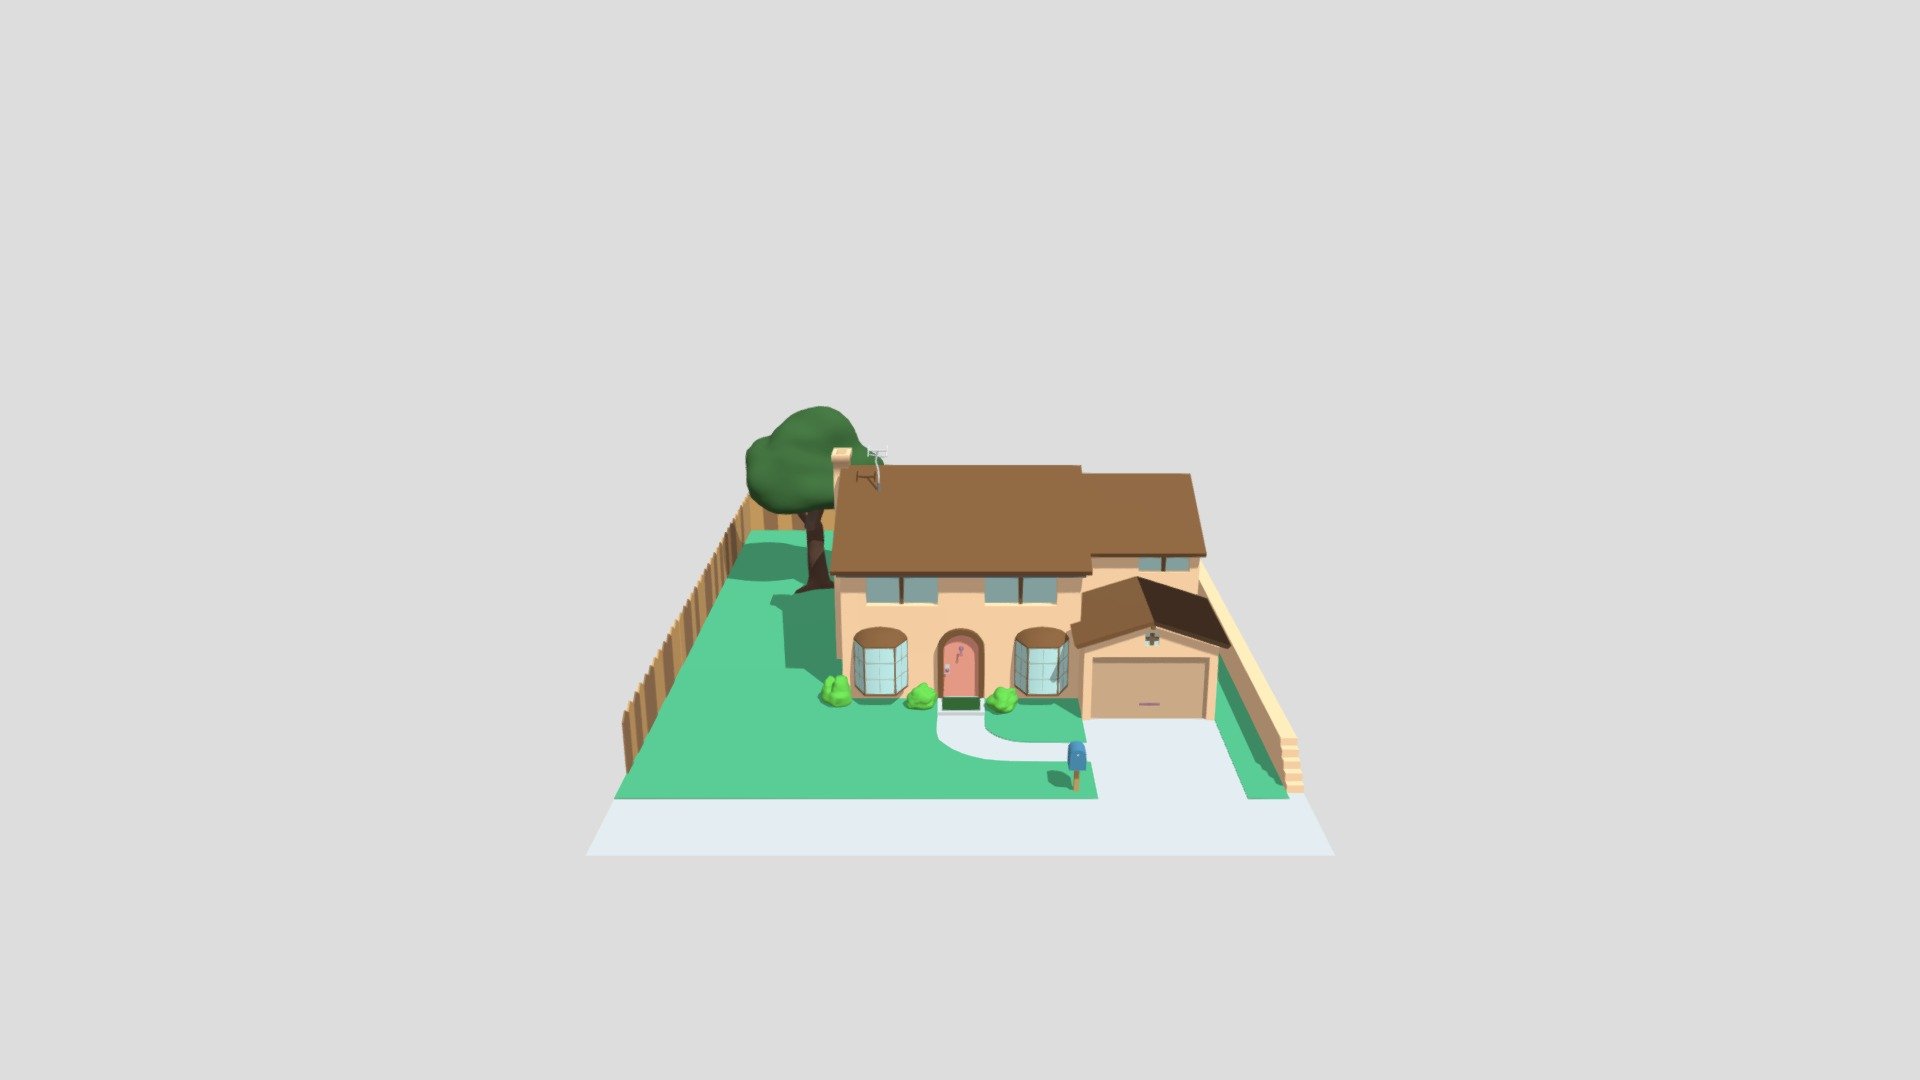 Simpson's house model - Simpson's house - 3D model by pau_llaurado 3d model